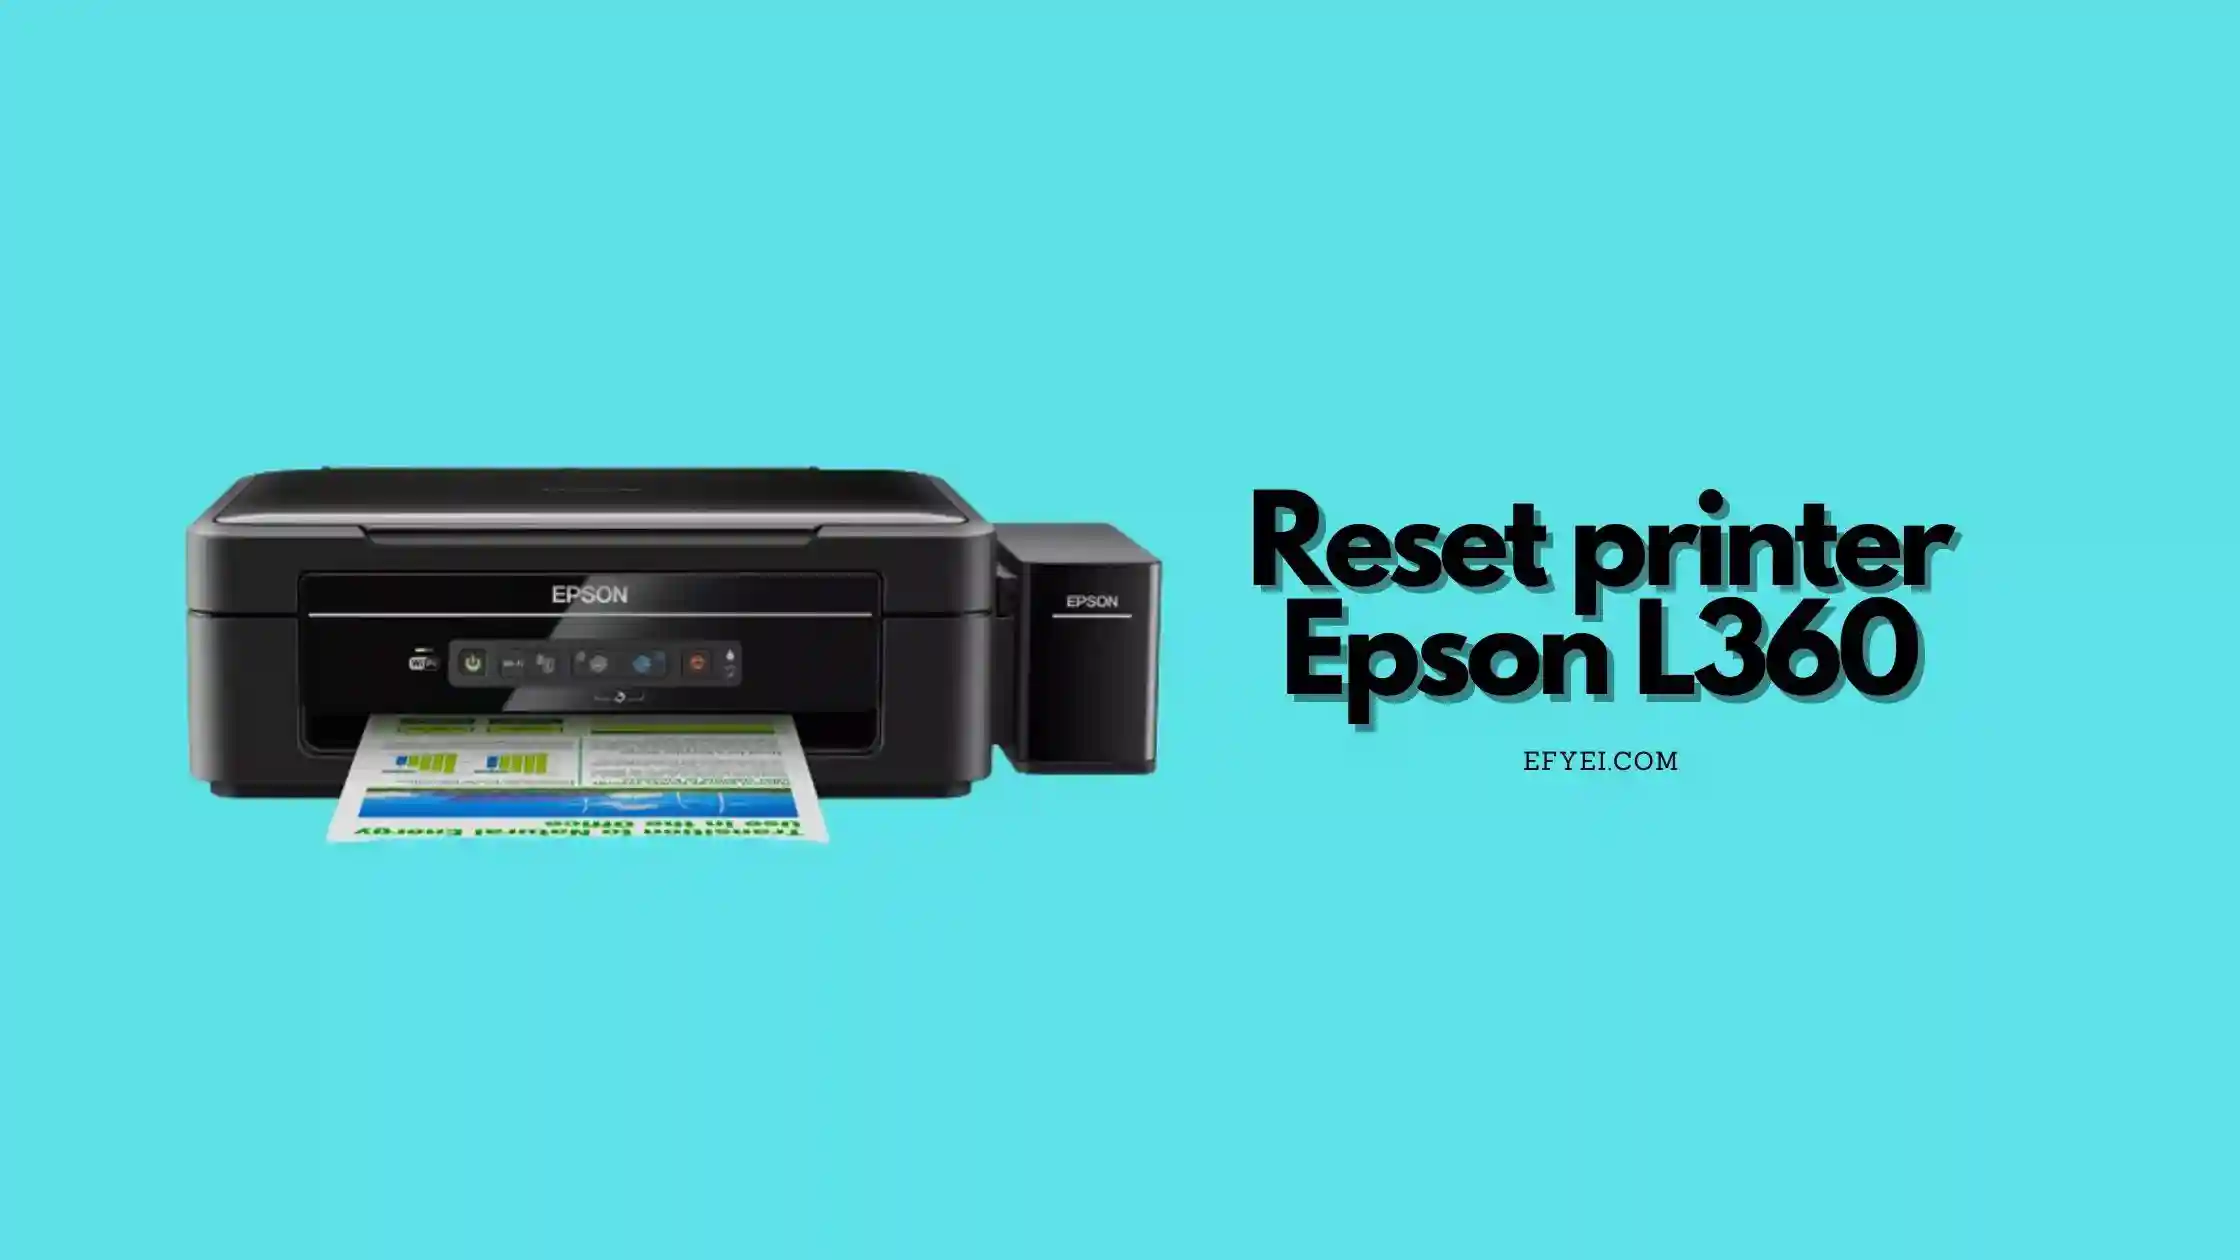 Reset printer Epson L360